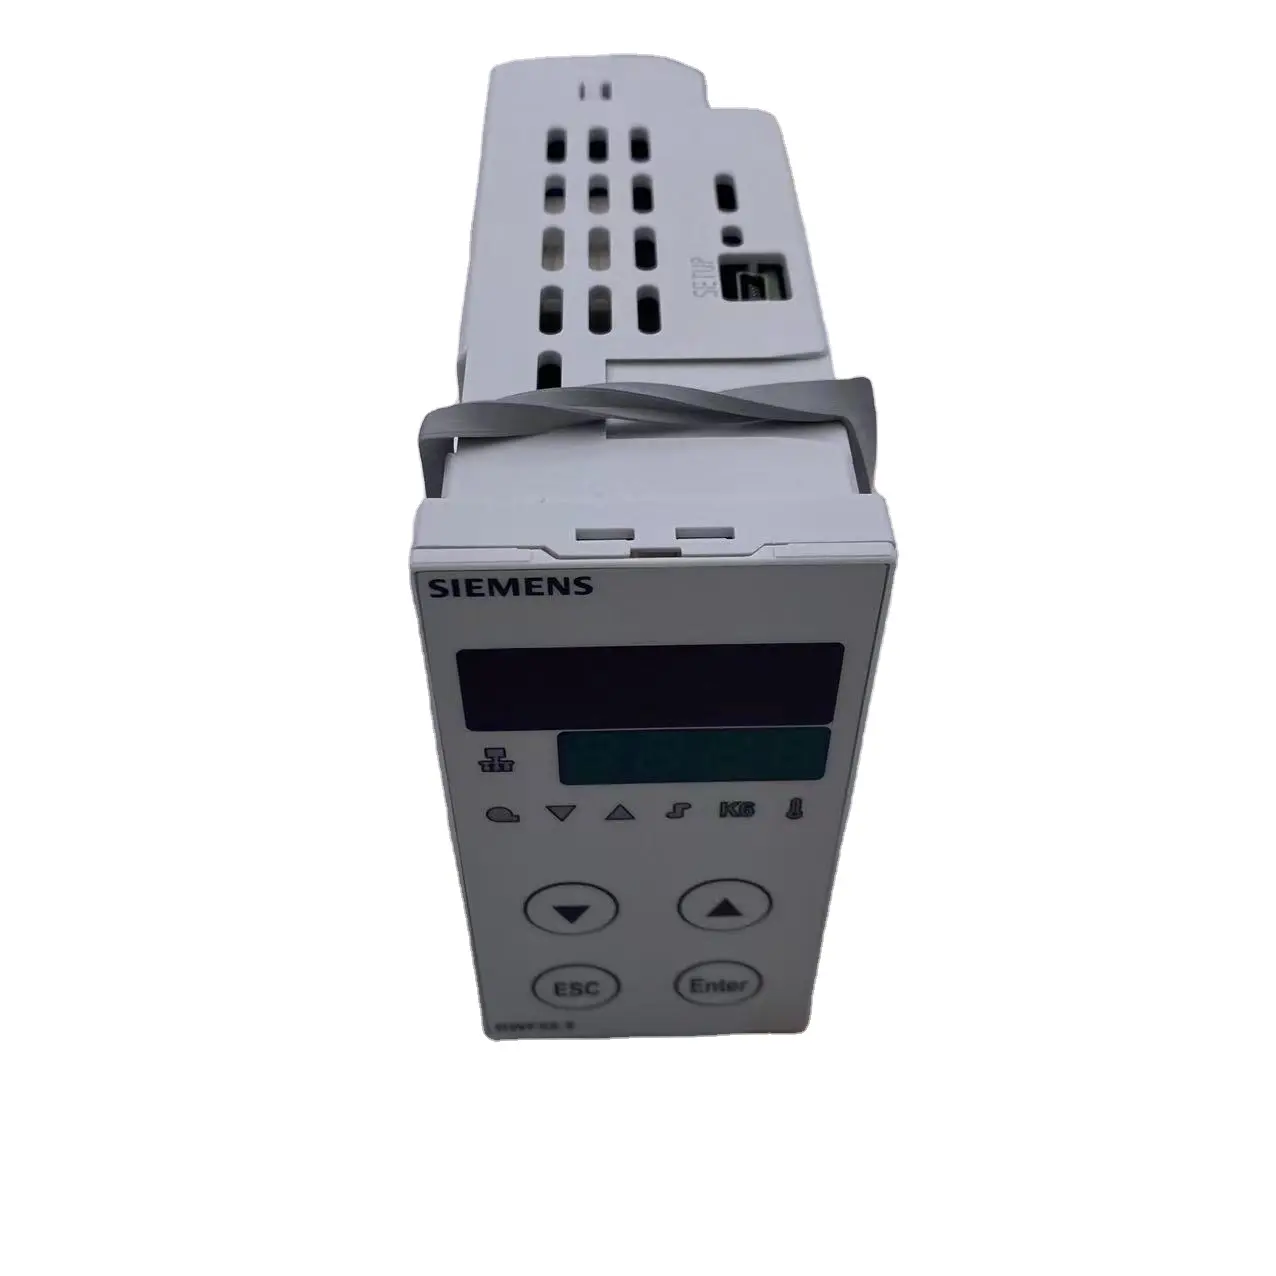 Shang Hai Ran Xian Shang Hai Ran Xian RWF55.50A9 Burner proportional regulator Temperature control meter controller for SIEMENS